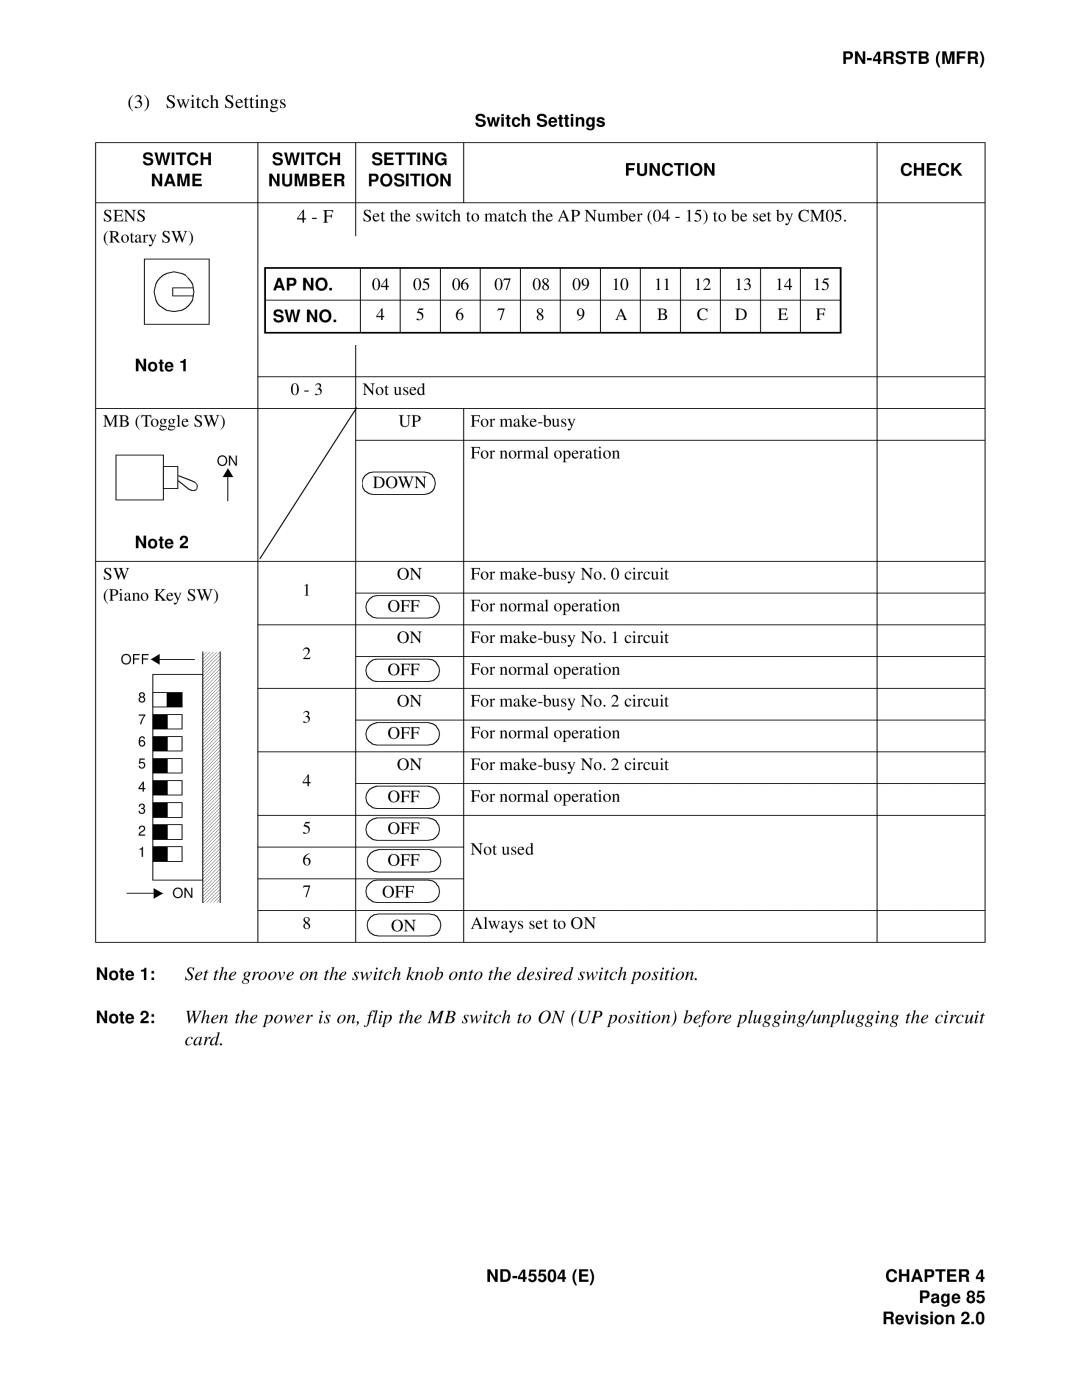 NEC 2000 IVS manual 4 - F, Switch Settings 